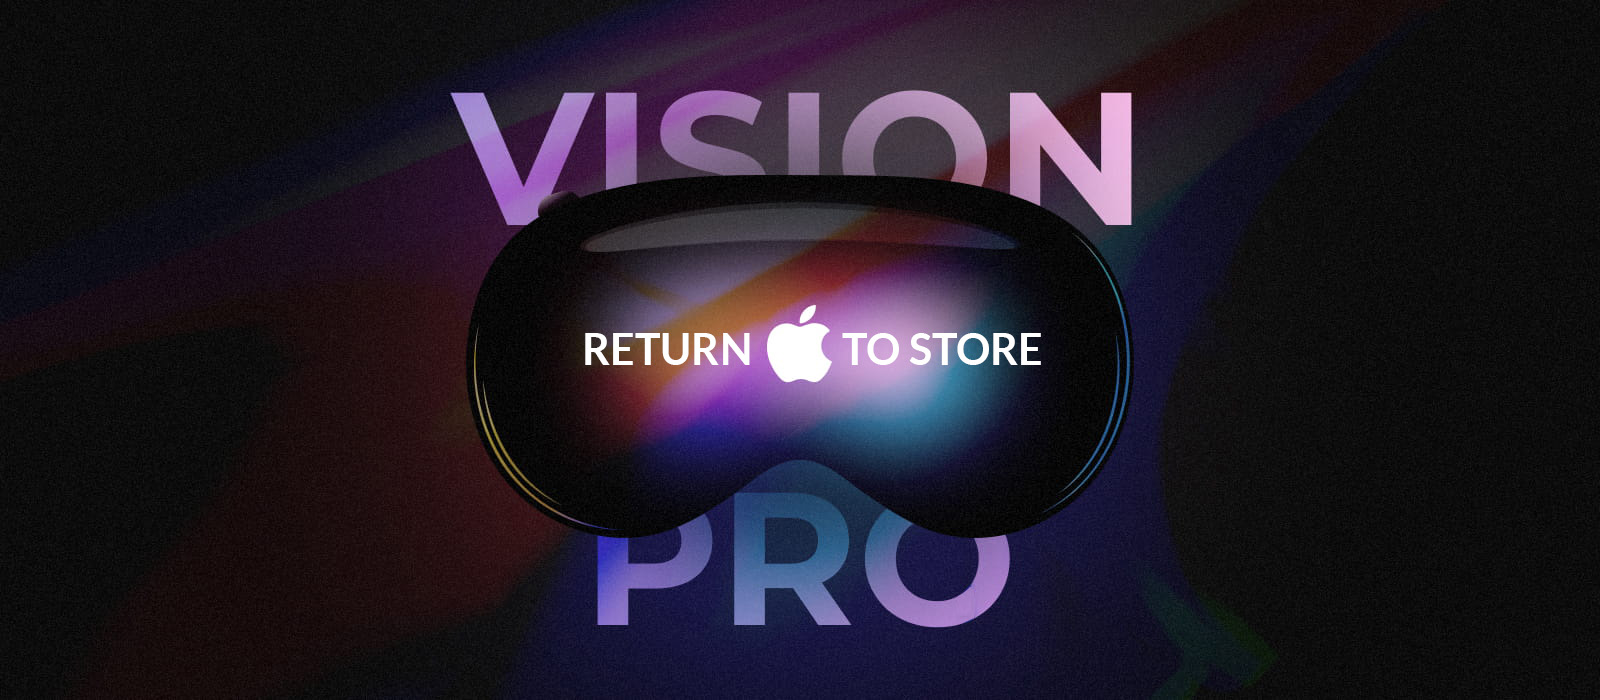 Stadig flere tidlige kjøpere returnerer sin Vision Pro